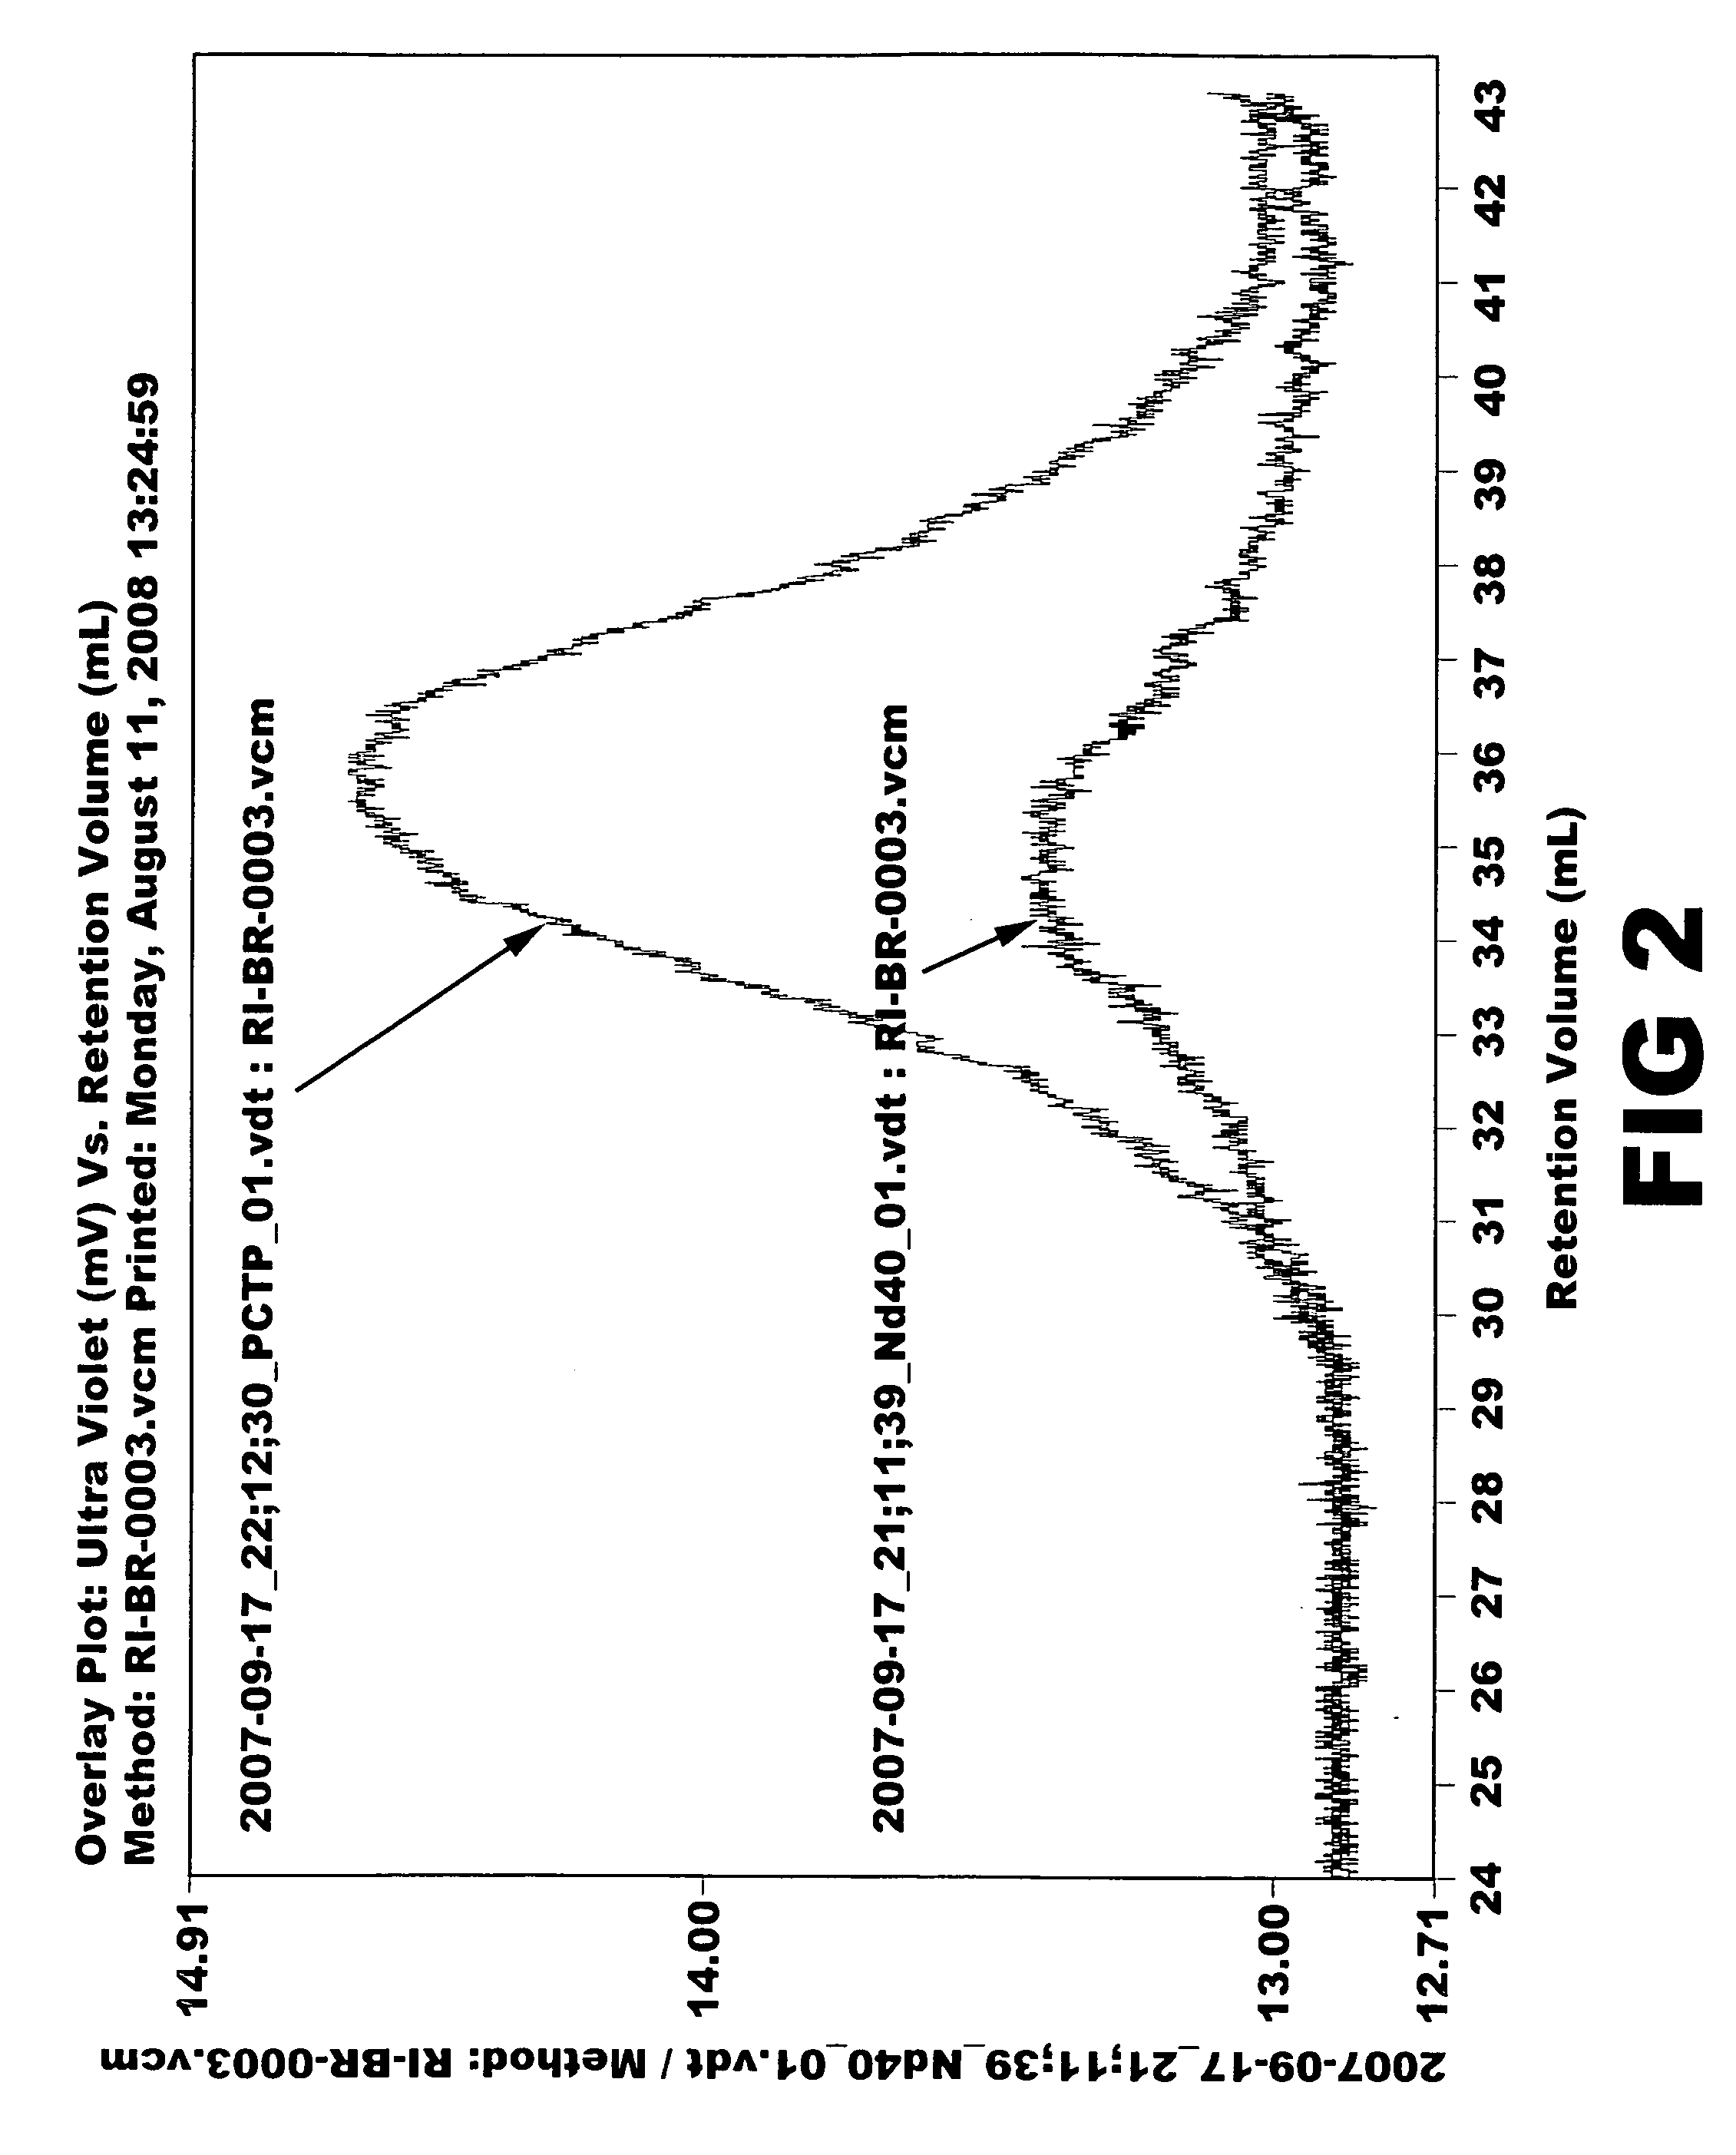 Aromatic Organosulfur Functionalized 1,4-cis Polybutadiene